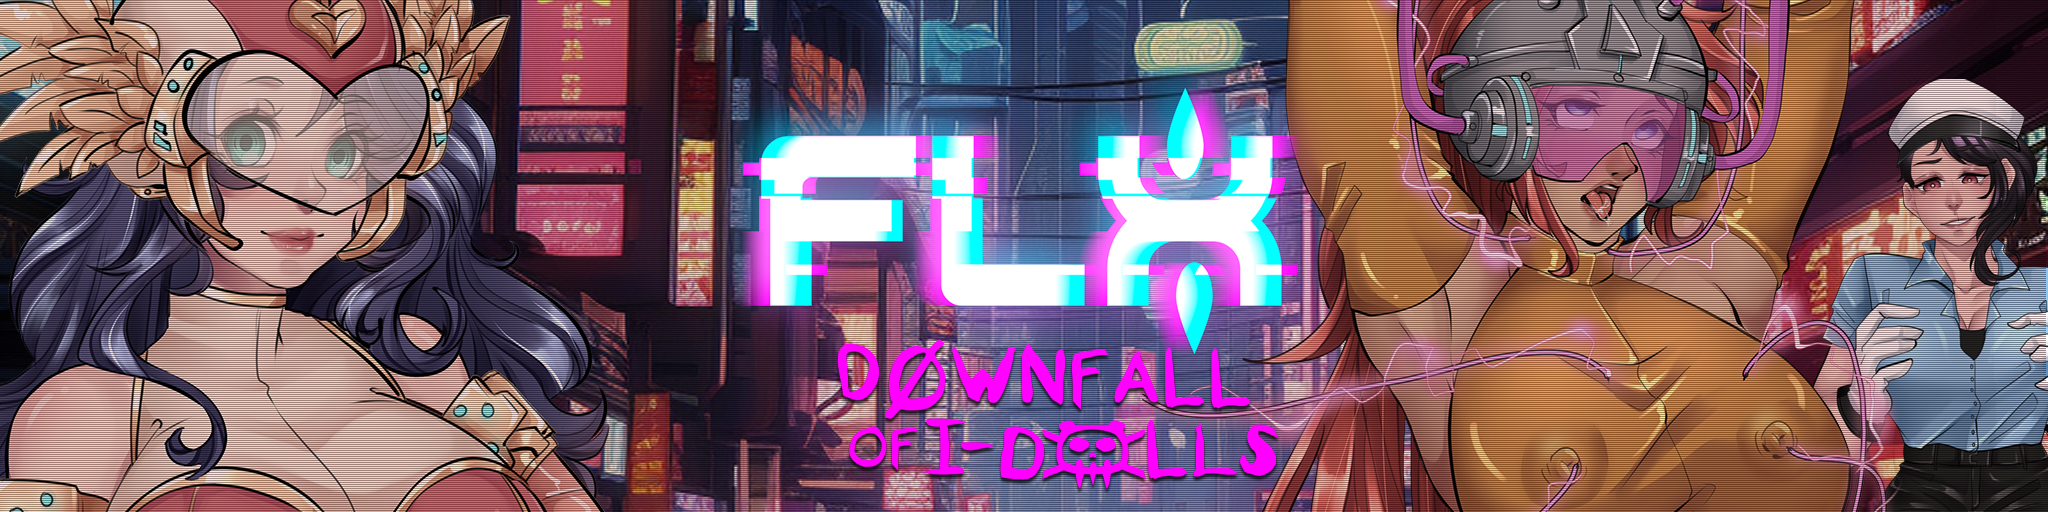 FLX - Downfall of I-Dolls poster